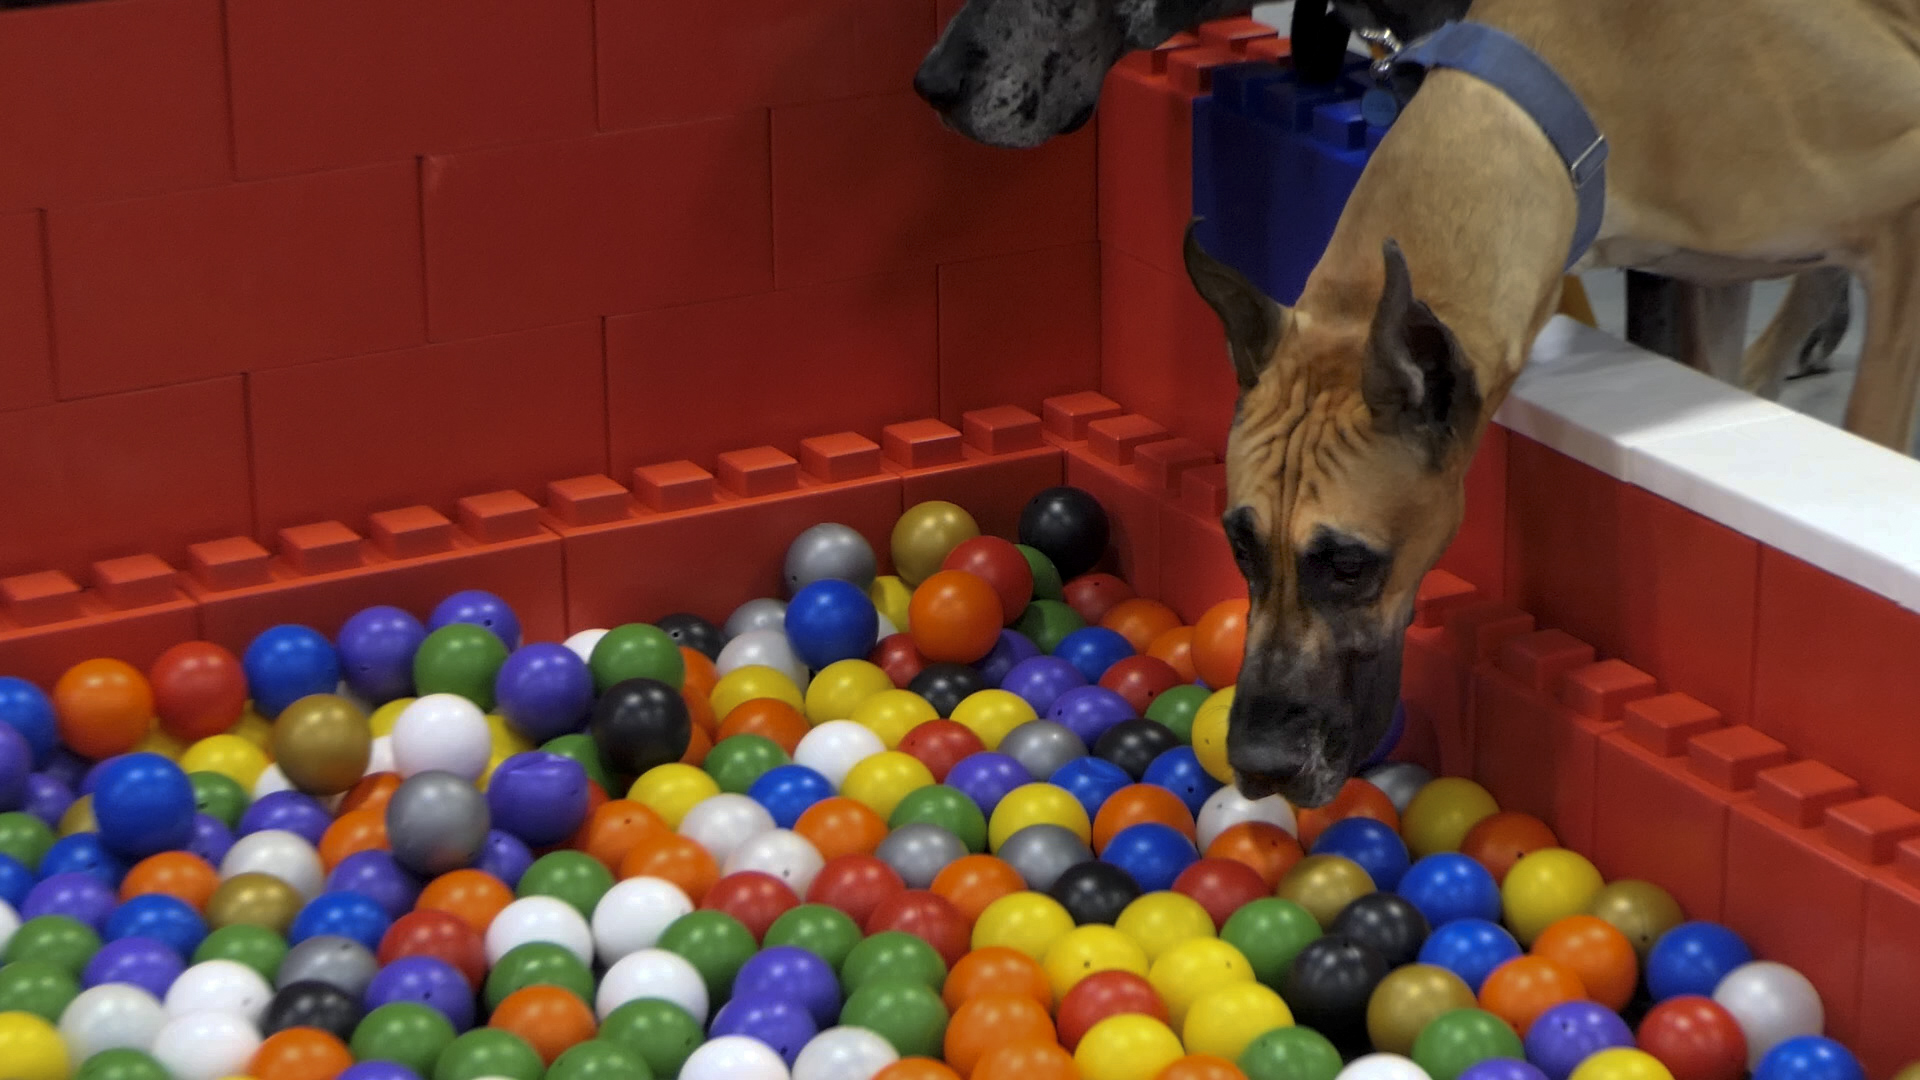 Super Pet Expo features social media sensation Dexter the Dog